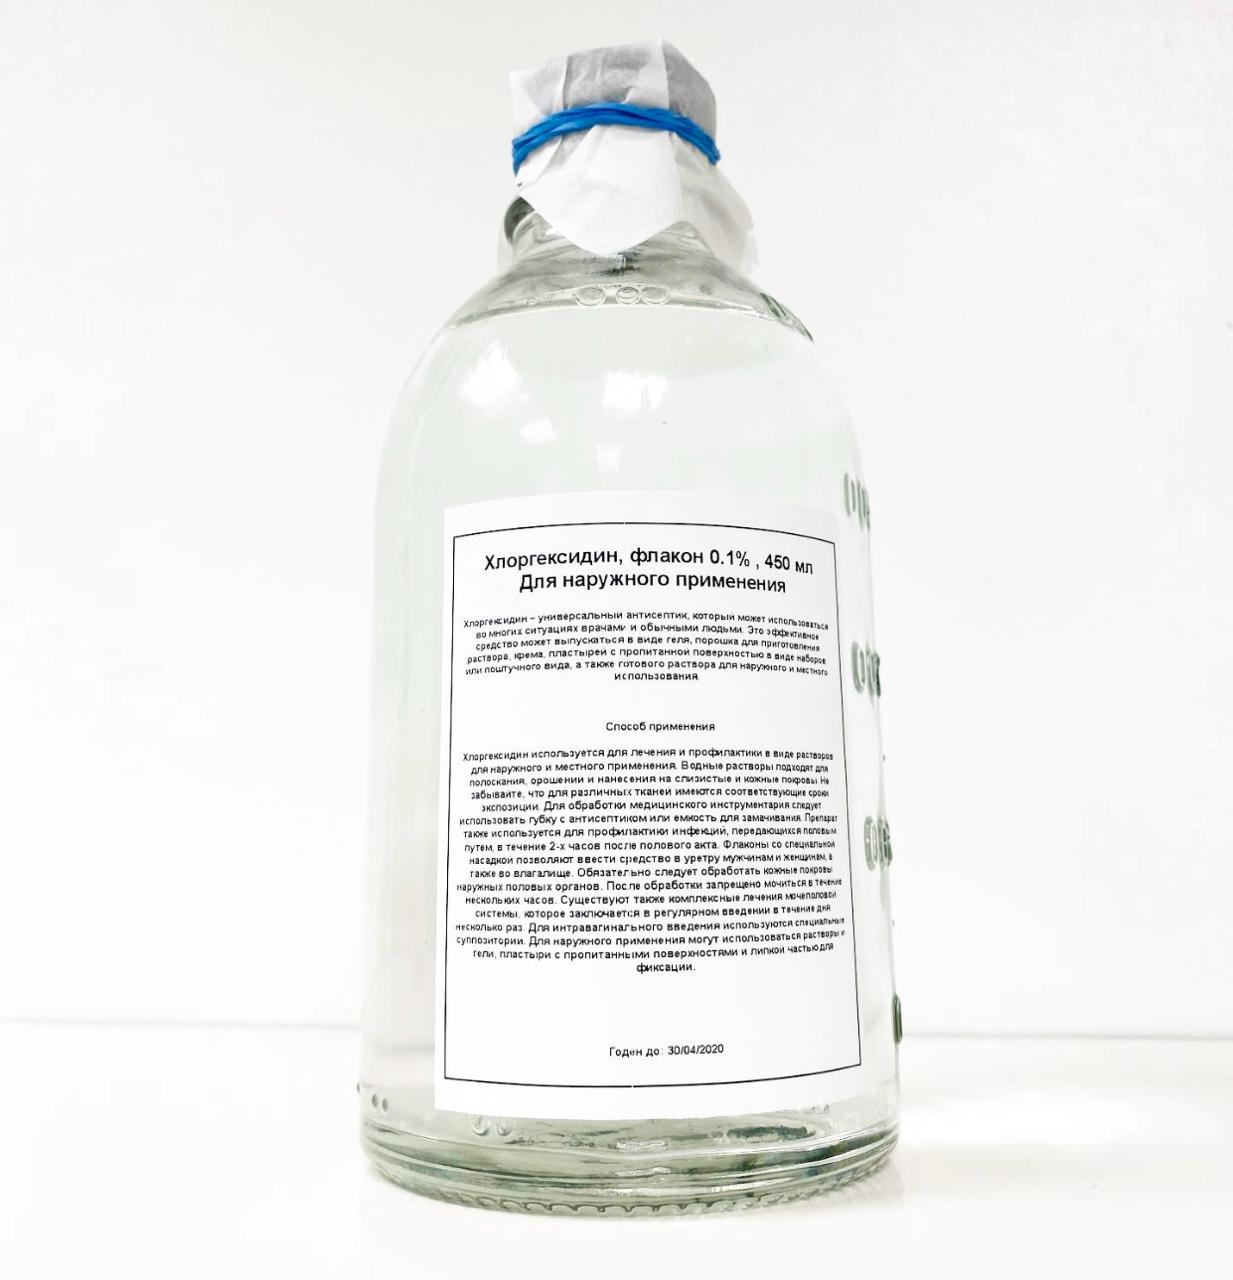 Хлоргексидин 1 литр